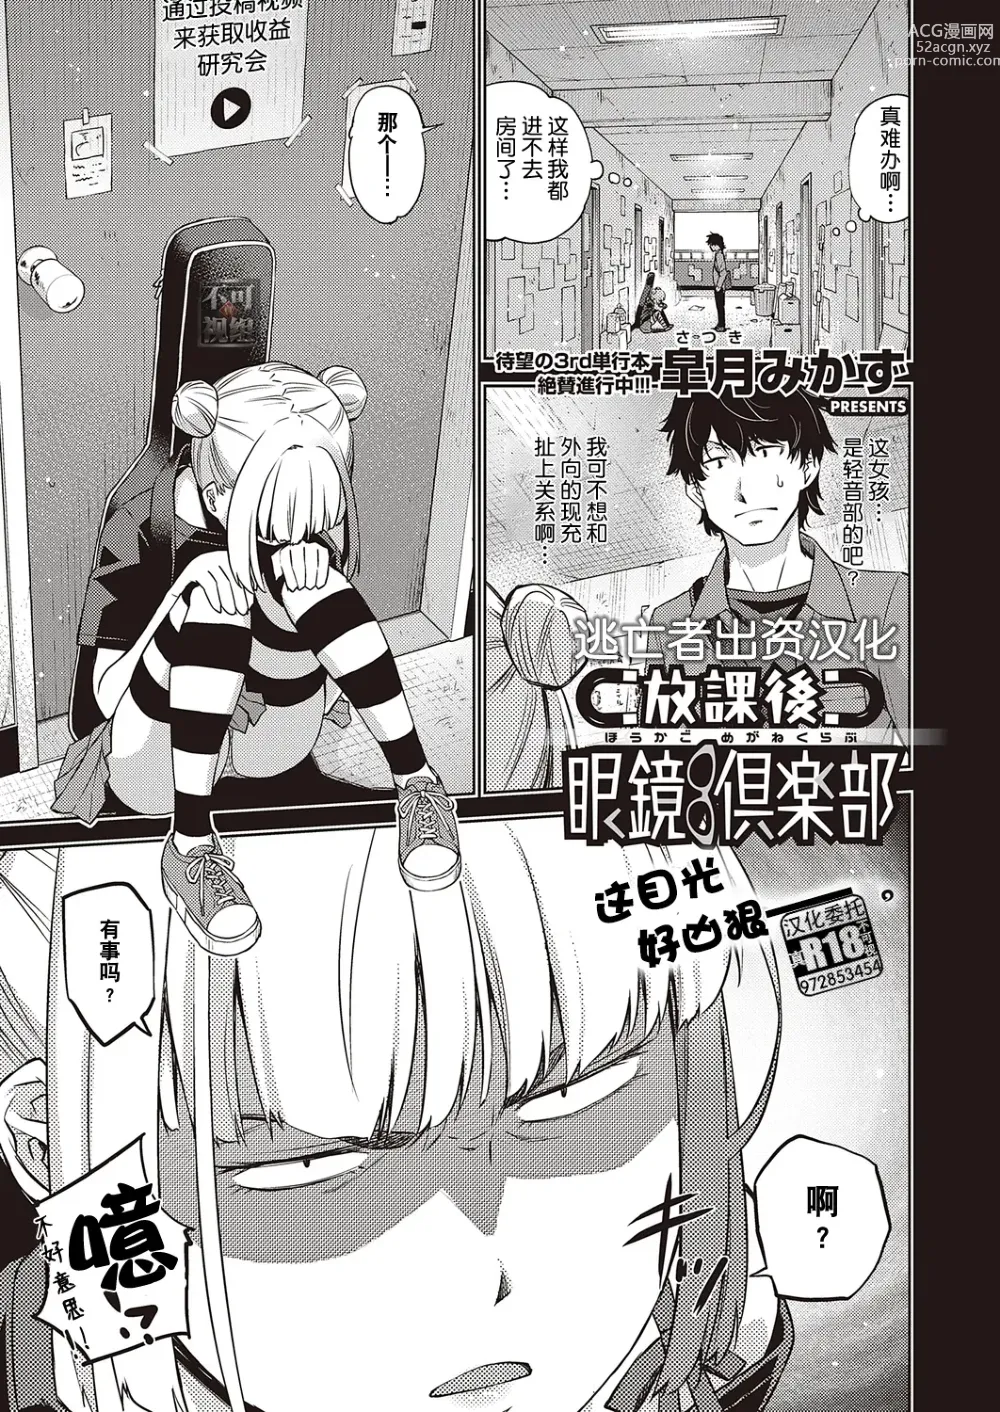 Page 1 of manga Houkago Megane Club